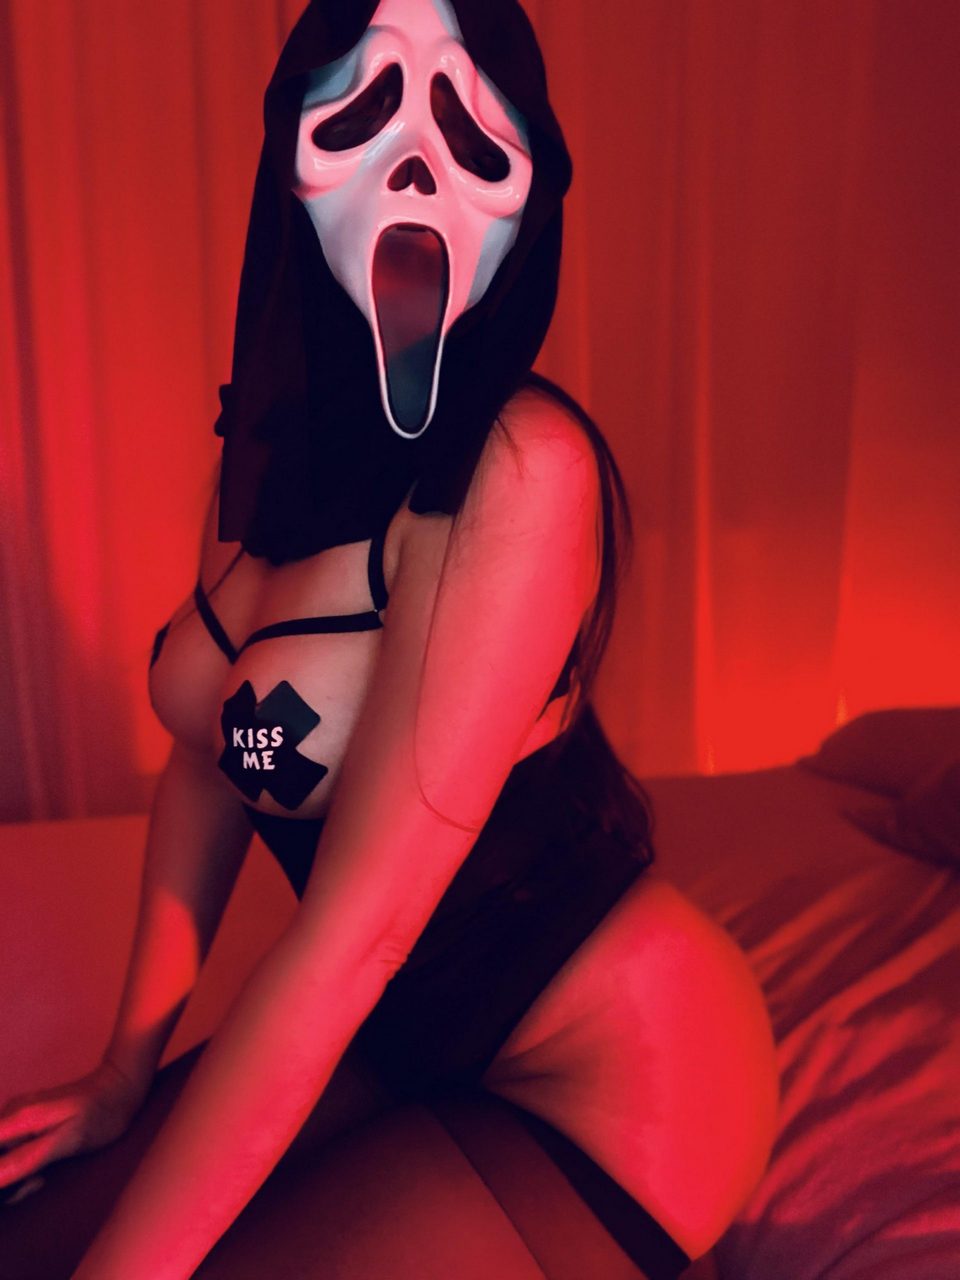 Ghostface From Scream By Onlymeeemz